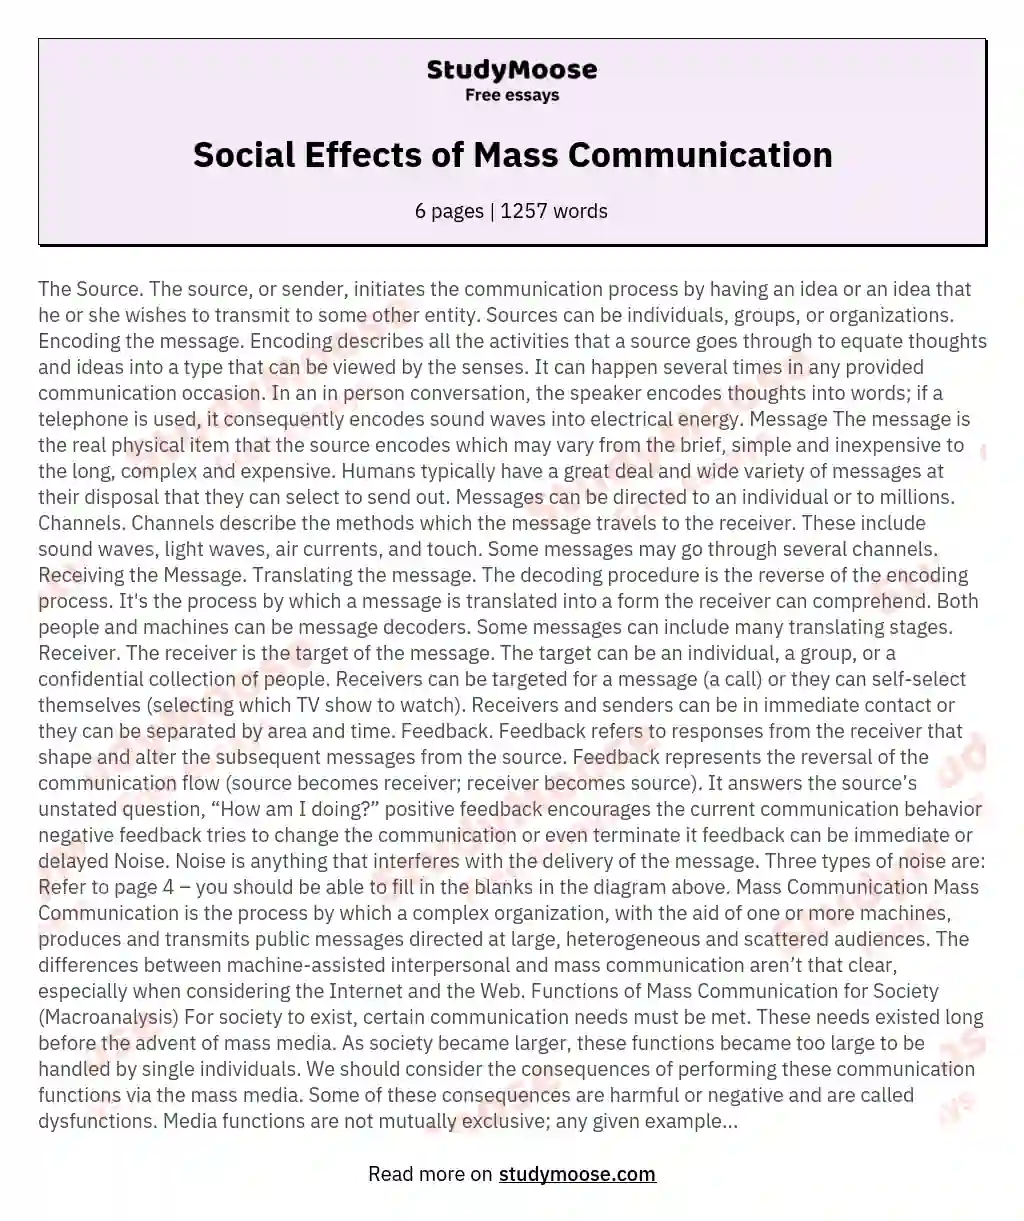 Social Effects of Mass Communication essay